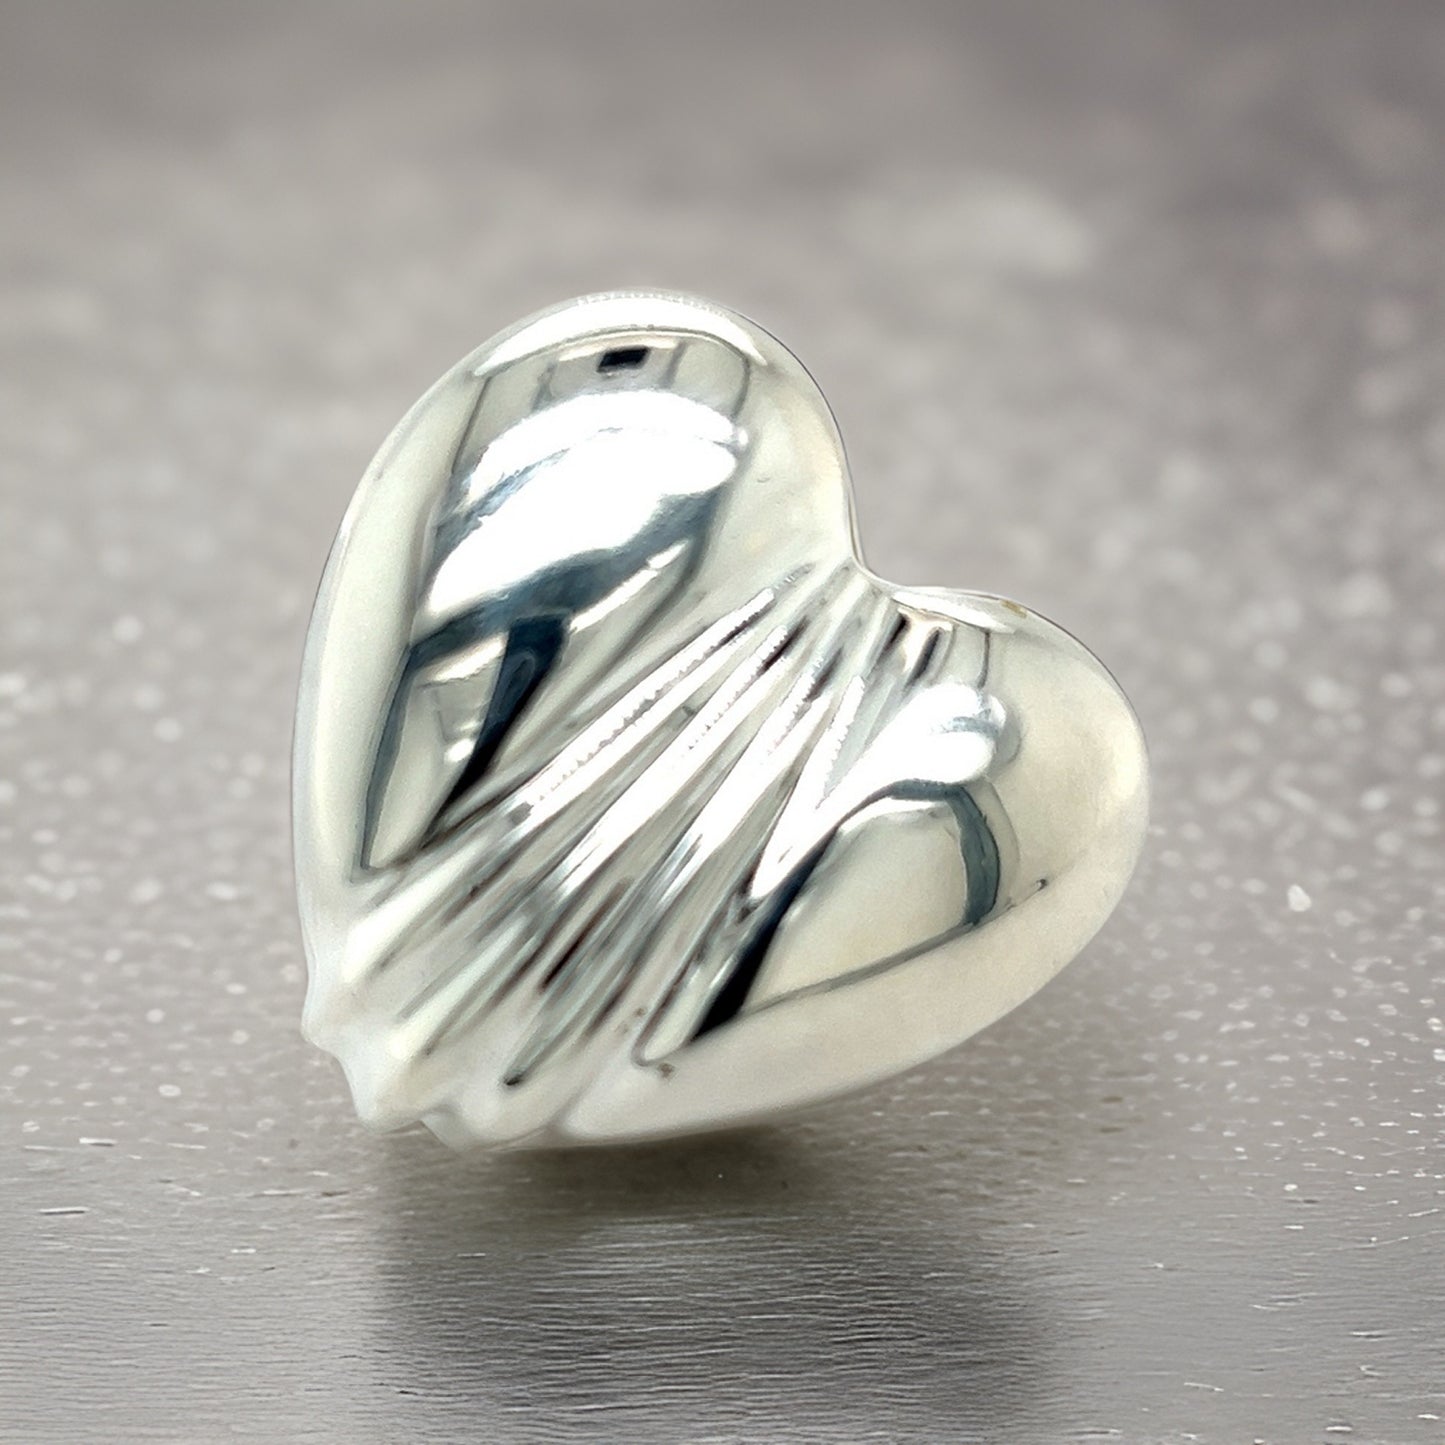 Tiffany & Co Estate Large Puffed Heart Brooch Pin Silver TIF355 - Certified Fine Jewelry